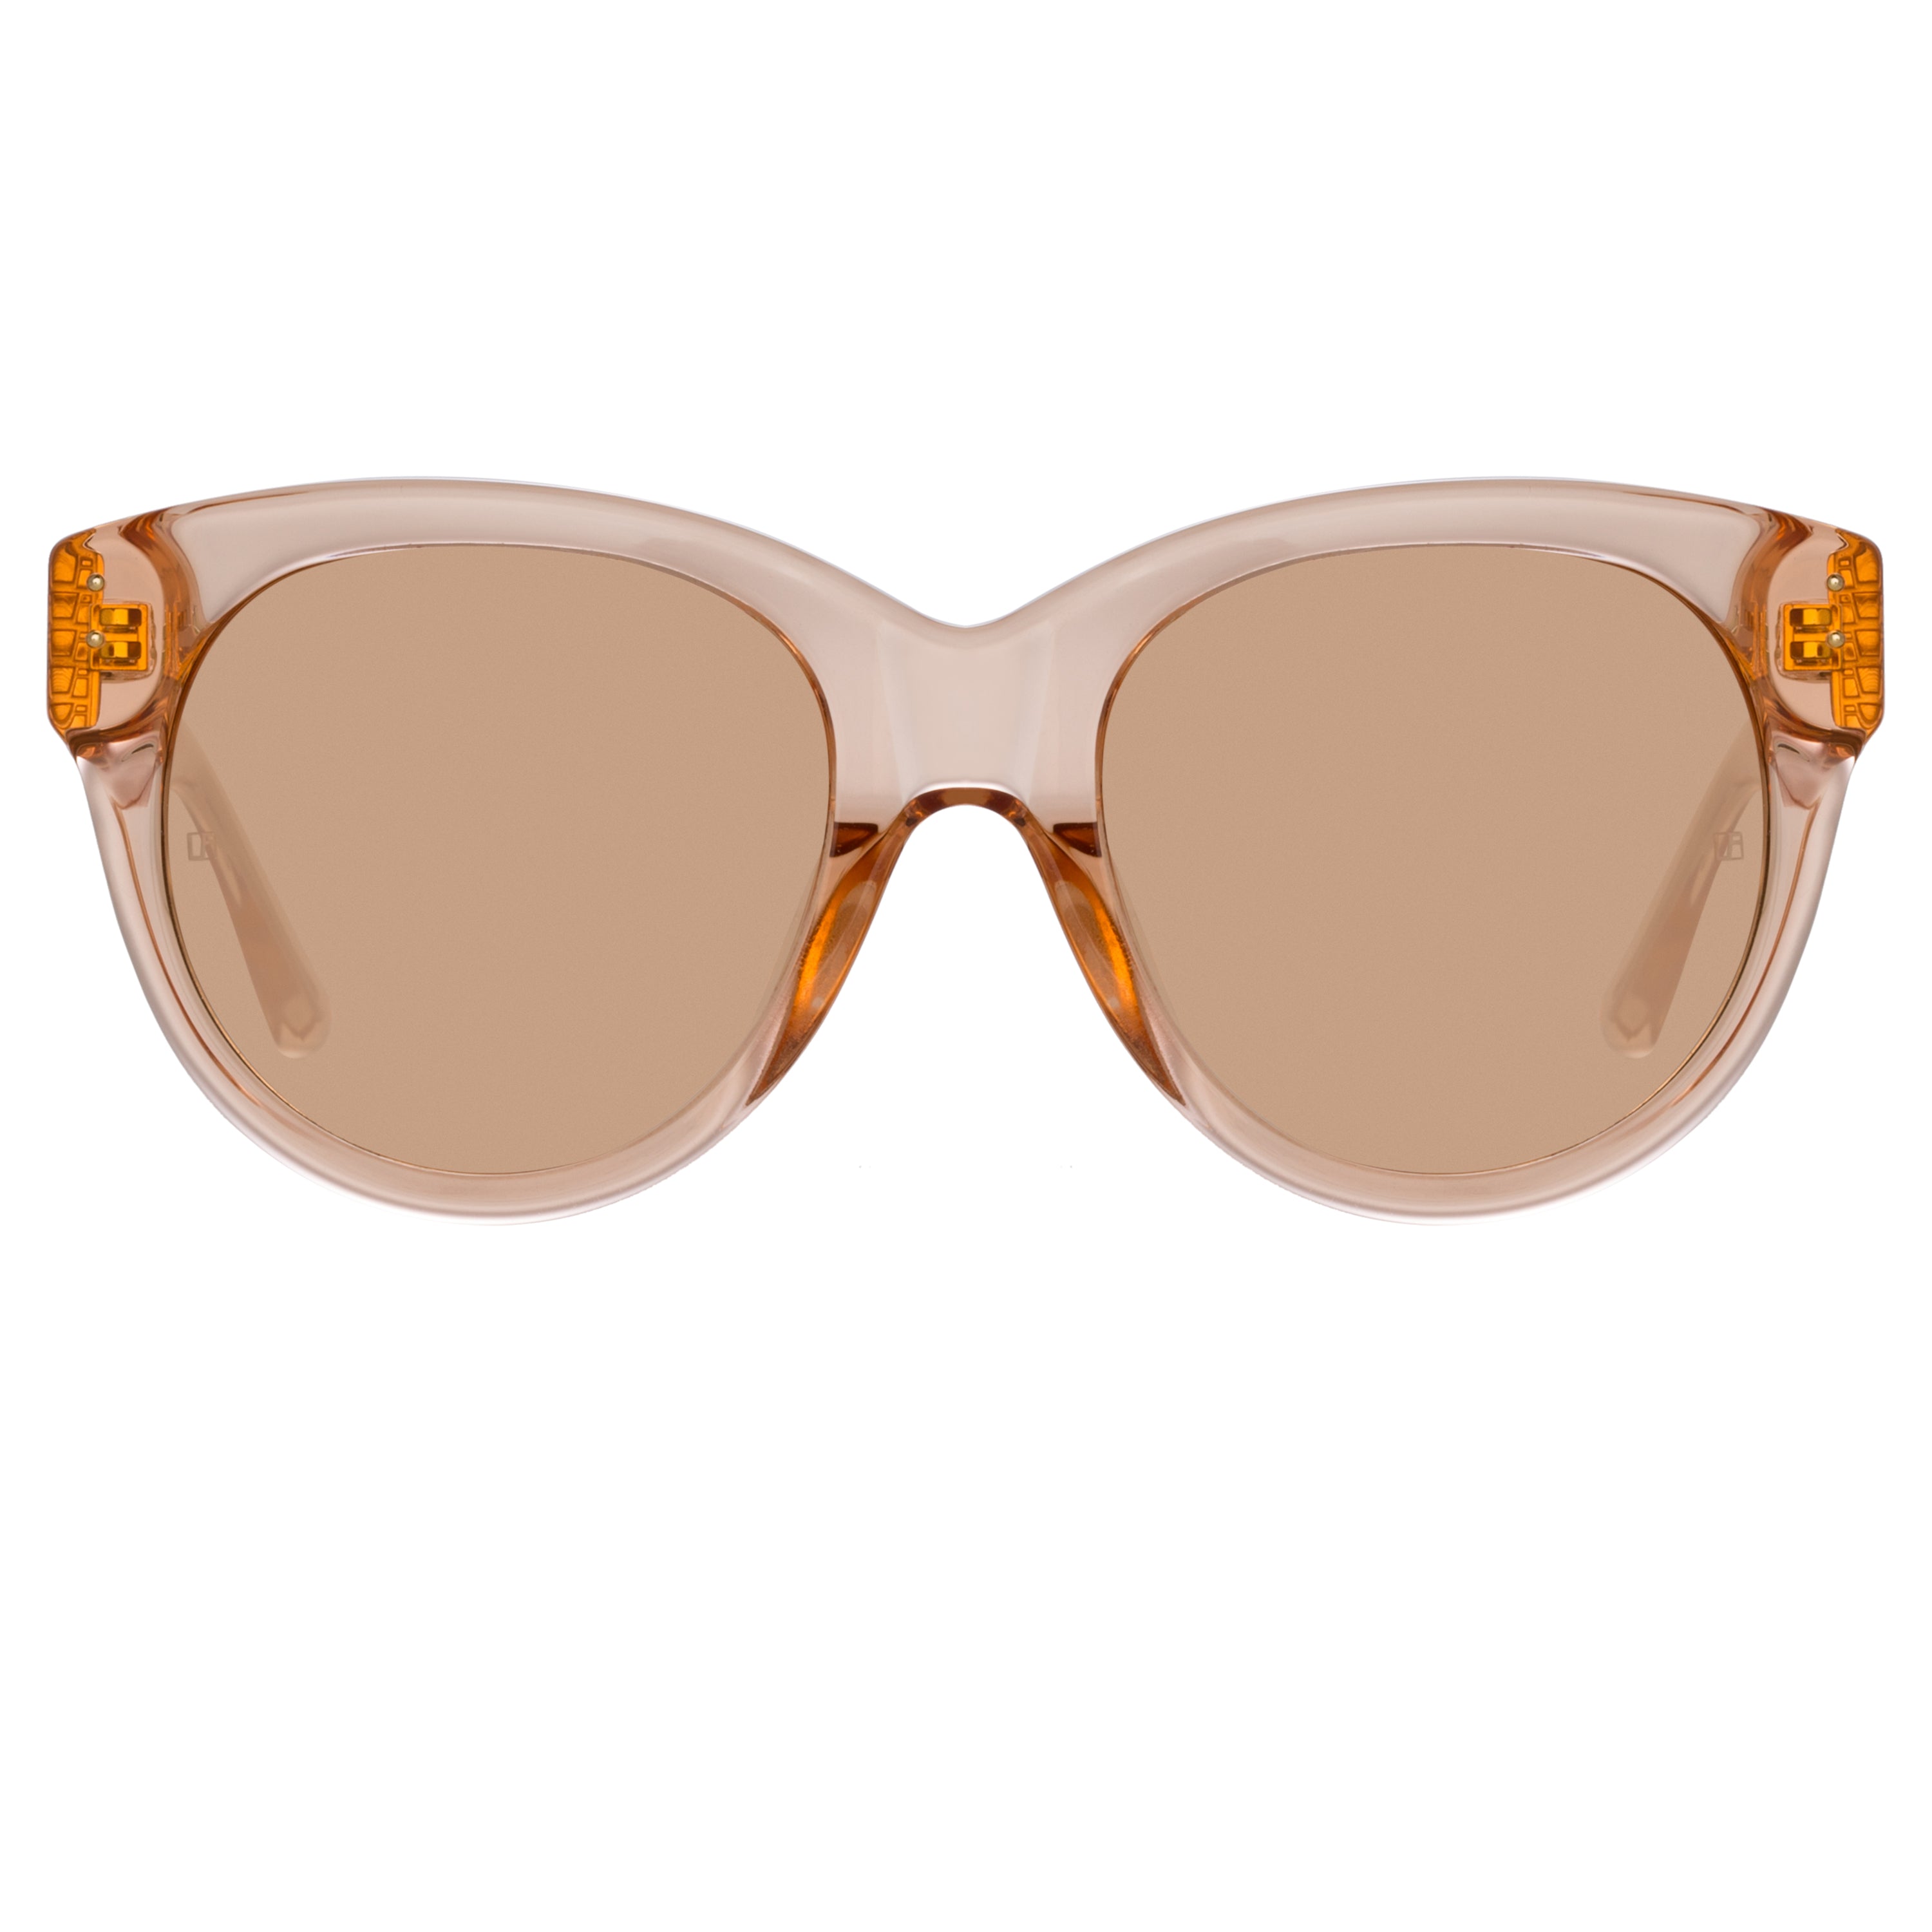 Madi Oversized Sunglasses in Peach